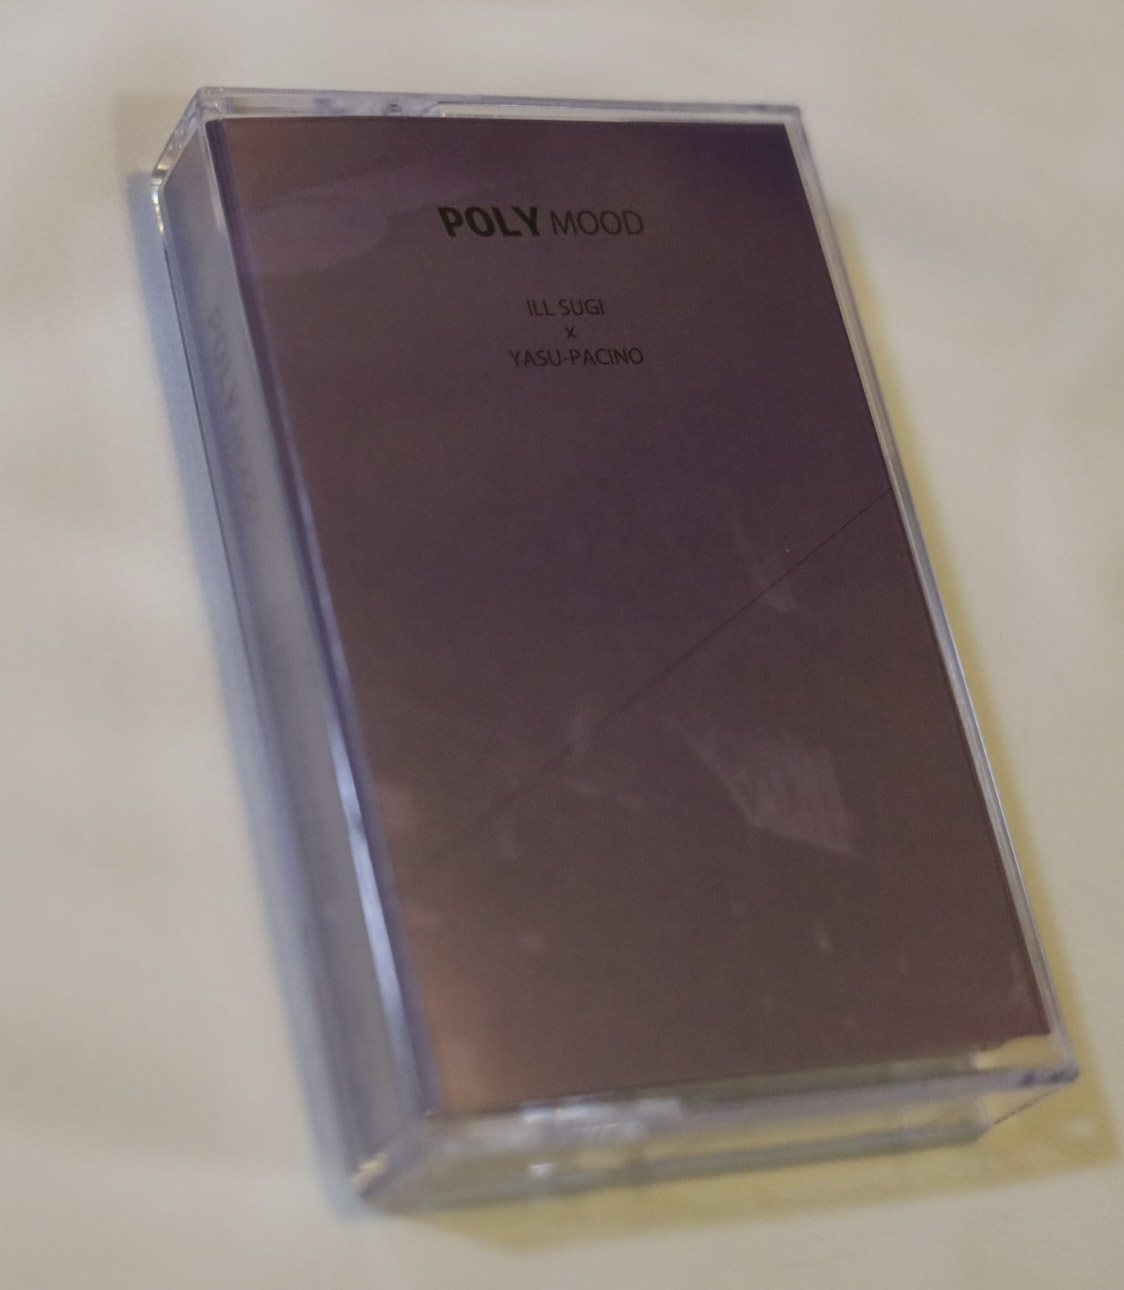 Ill Sugi x Yasu-Pacino 『POLYMOOD』cassette+DL code